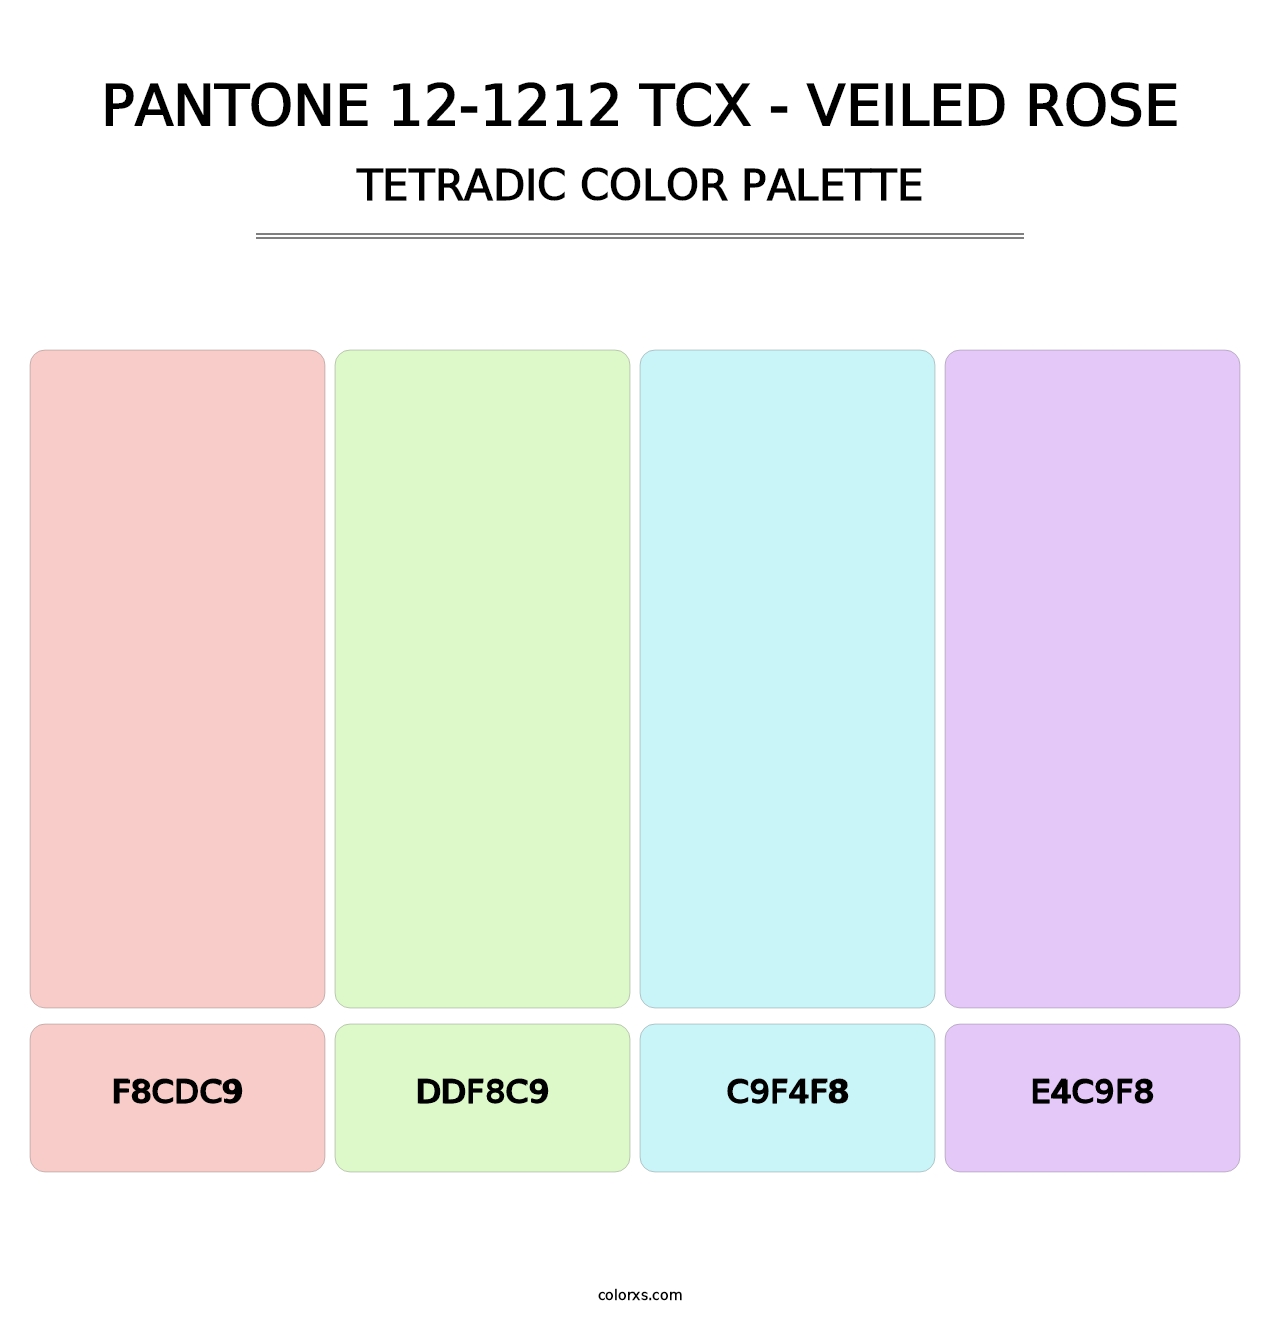 PANTONE 12-1212 TCX - Veiled Rose - Tetradic Color Palette